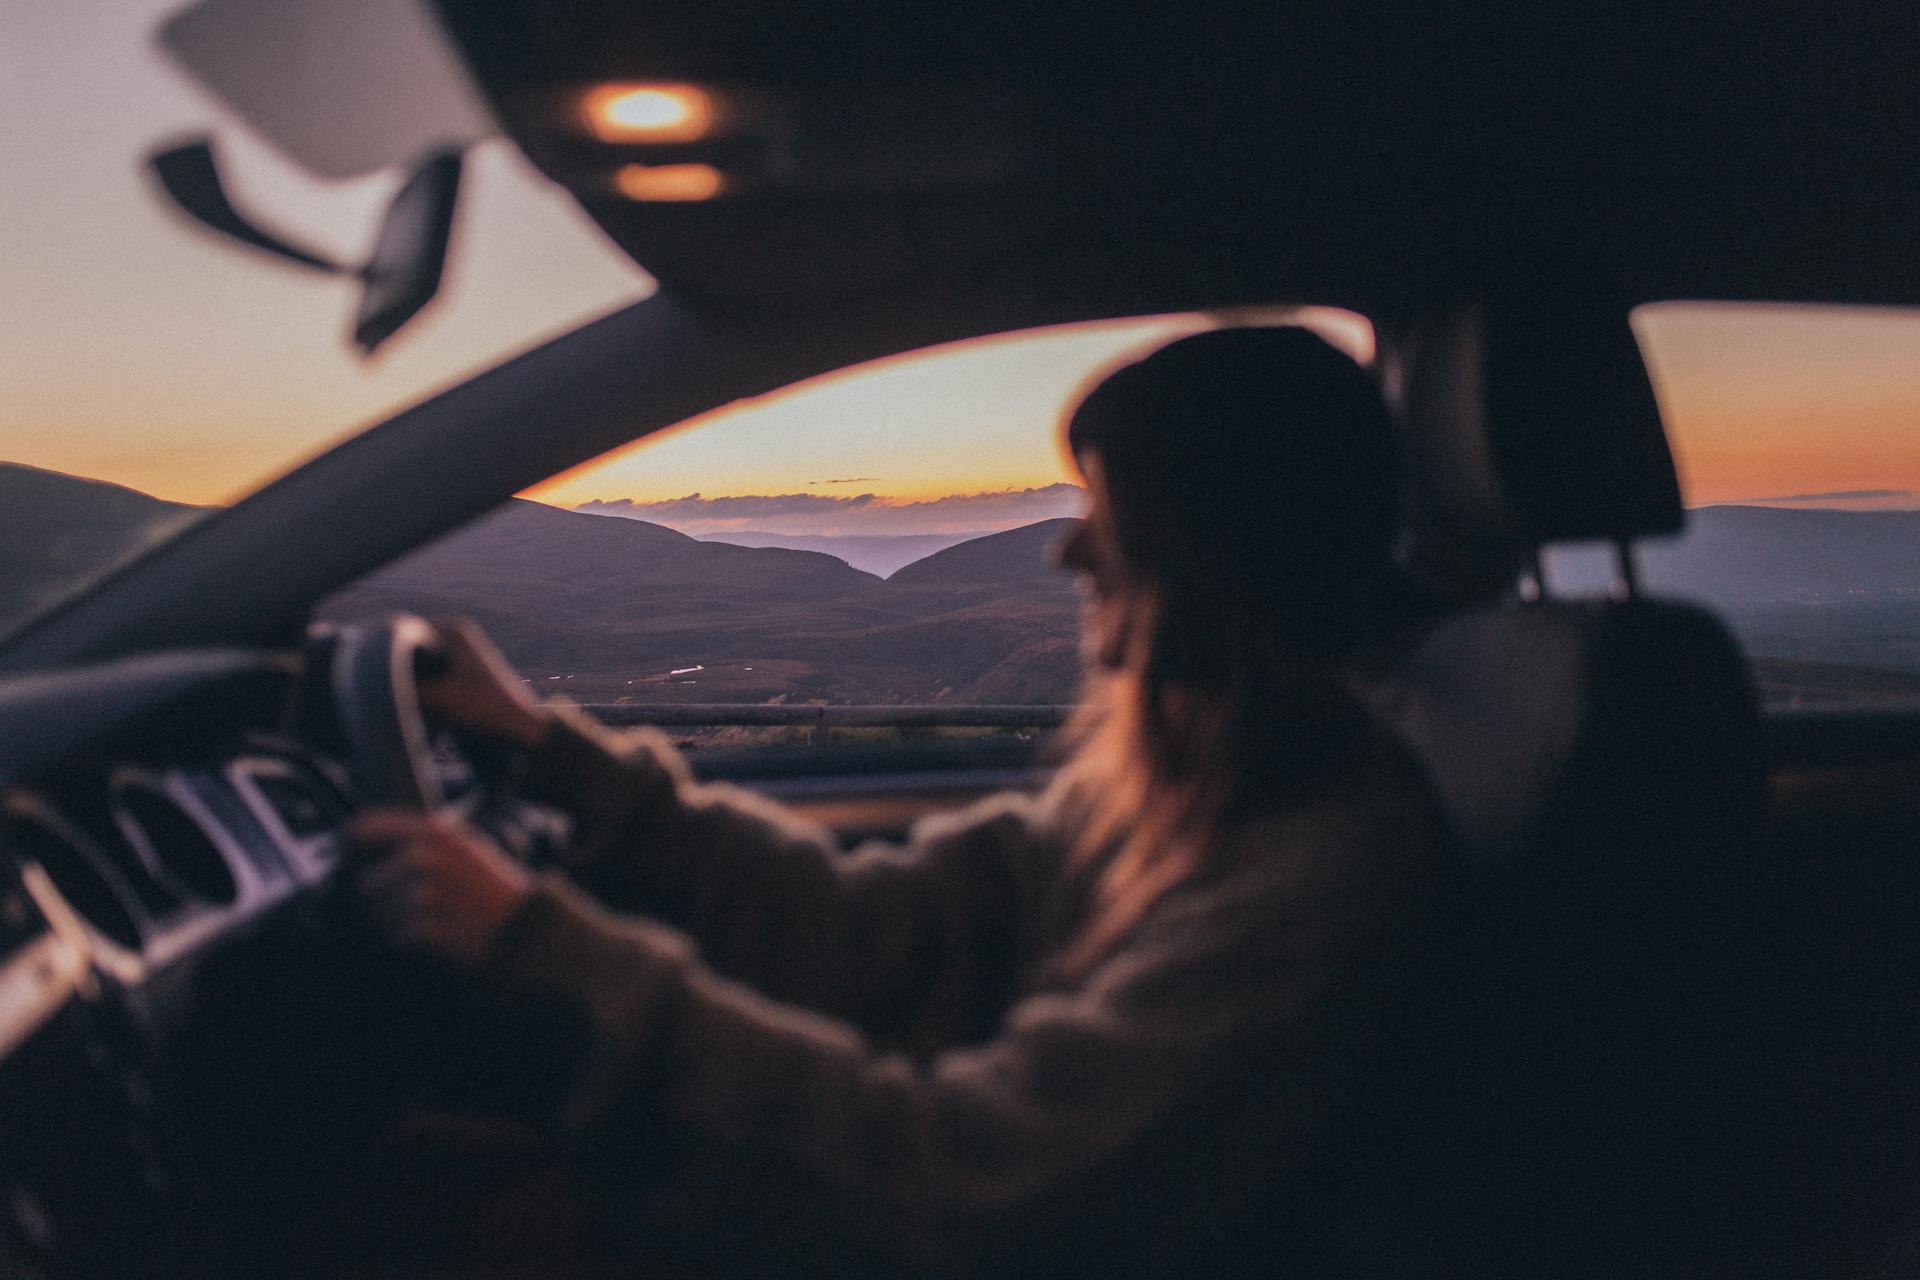 Person holding steering wheel | Source: Pexels